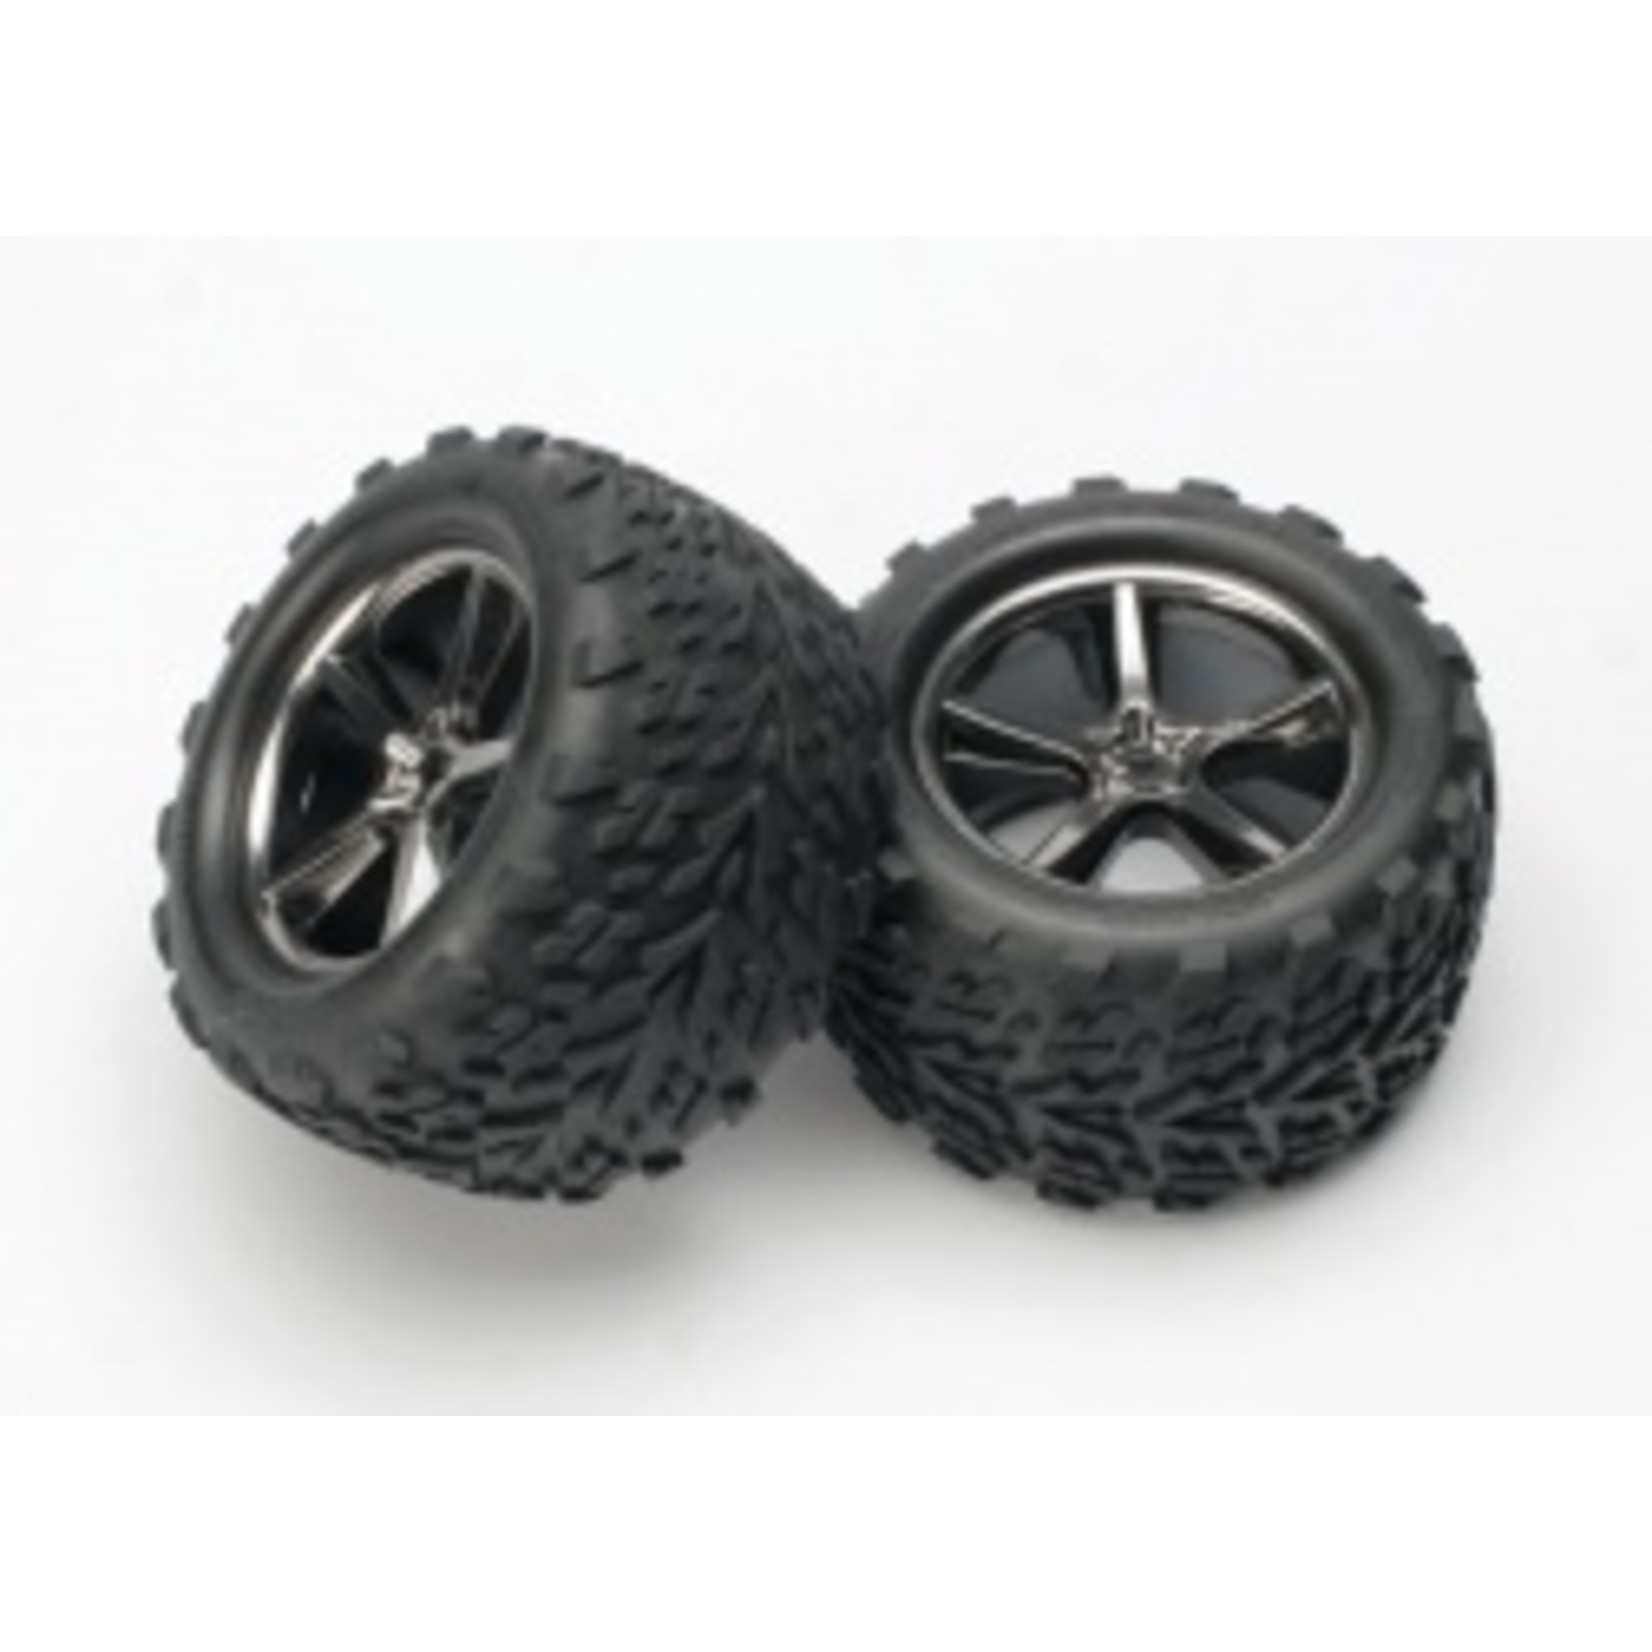 Traxxas 5374A Tires & wheels, assembled, glued (Gemini black chrome wheels, Talon tires, foam inserts) (2)